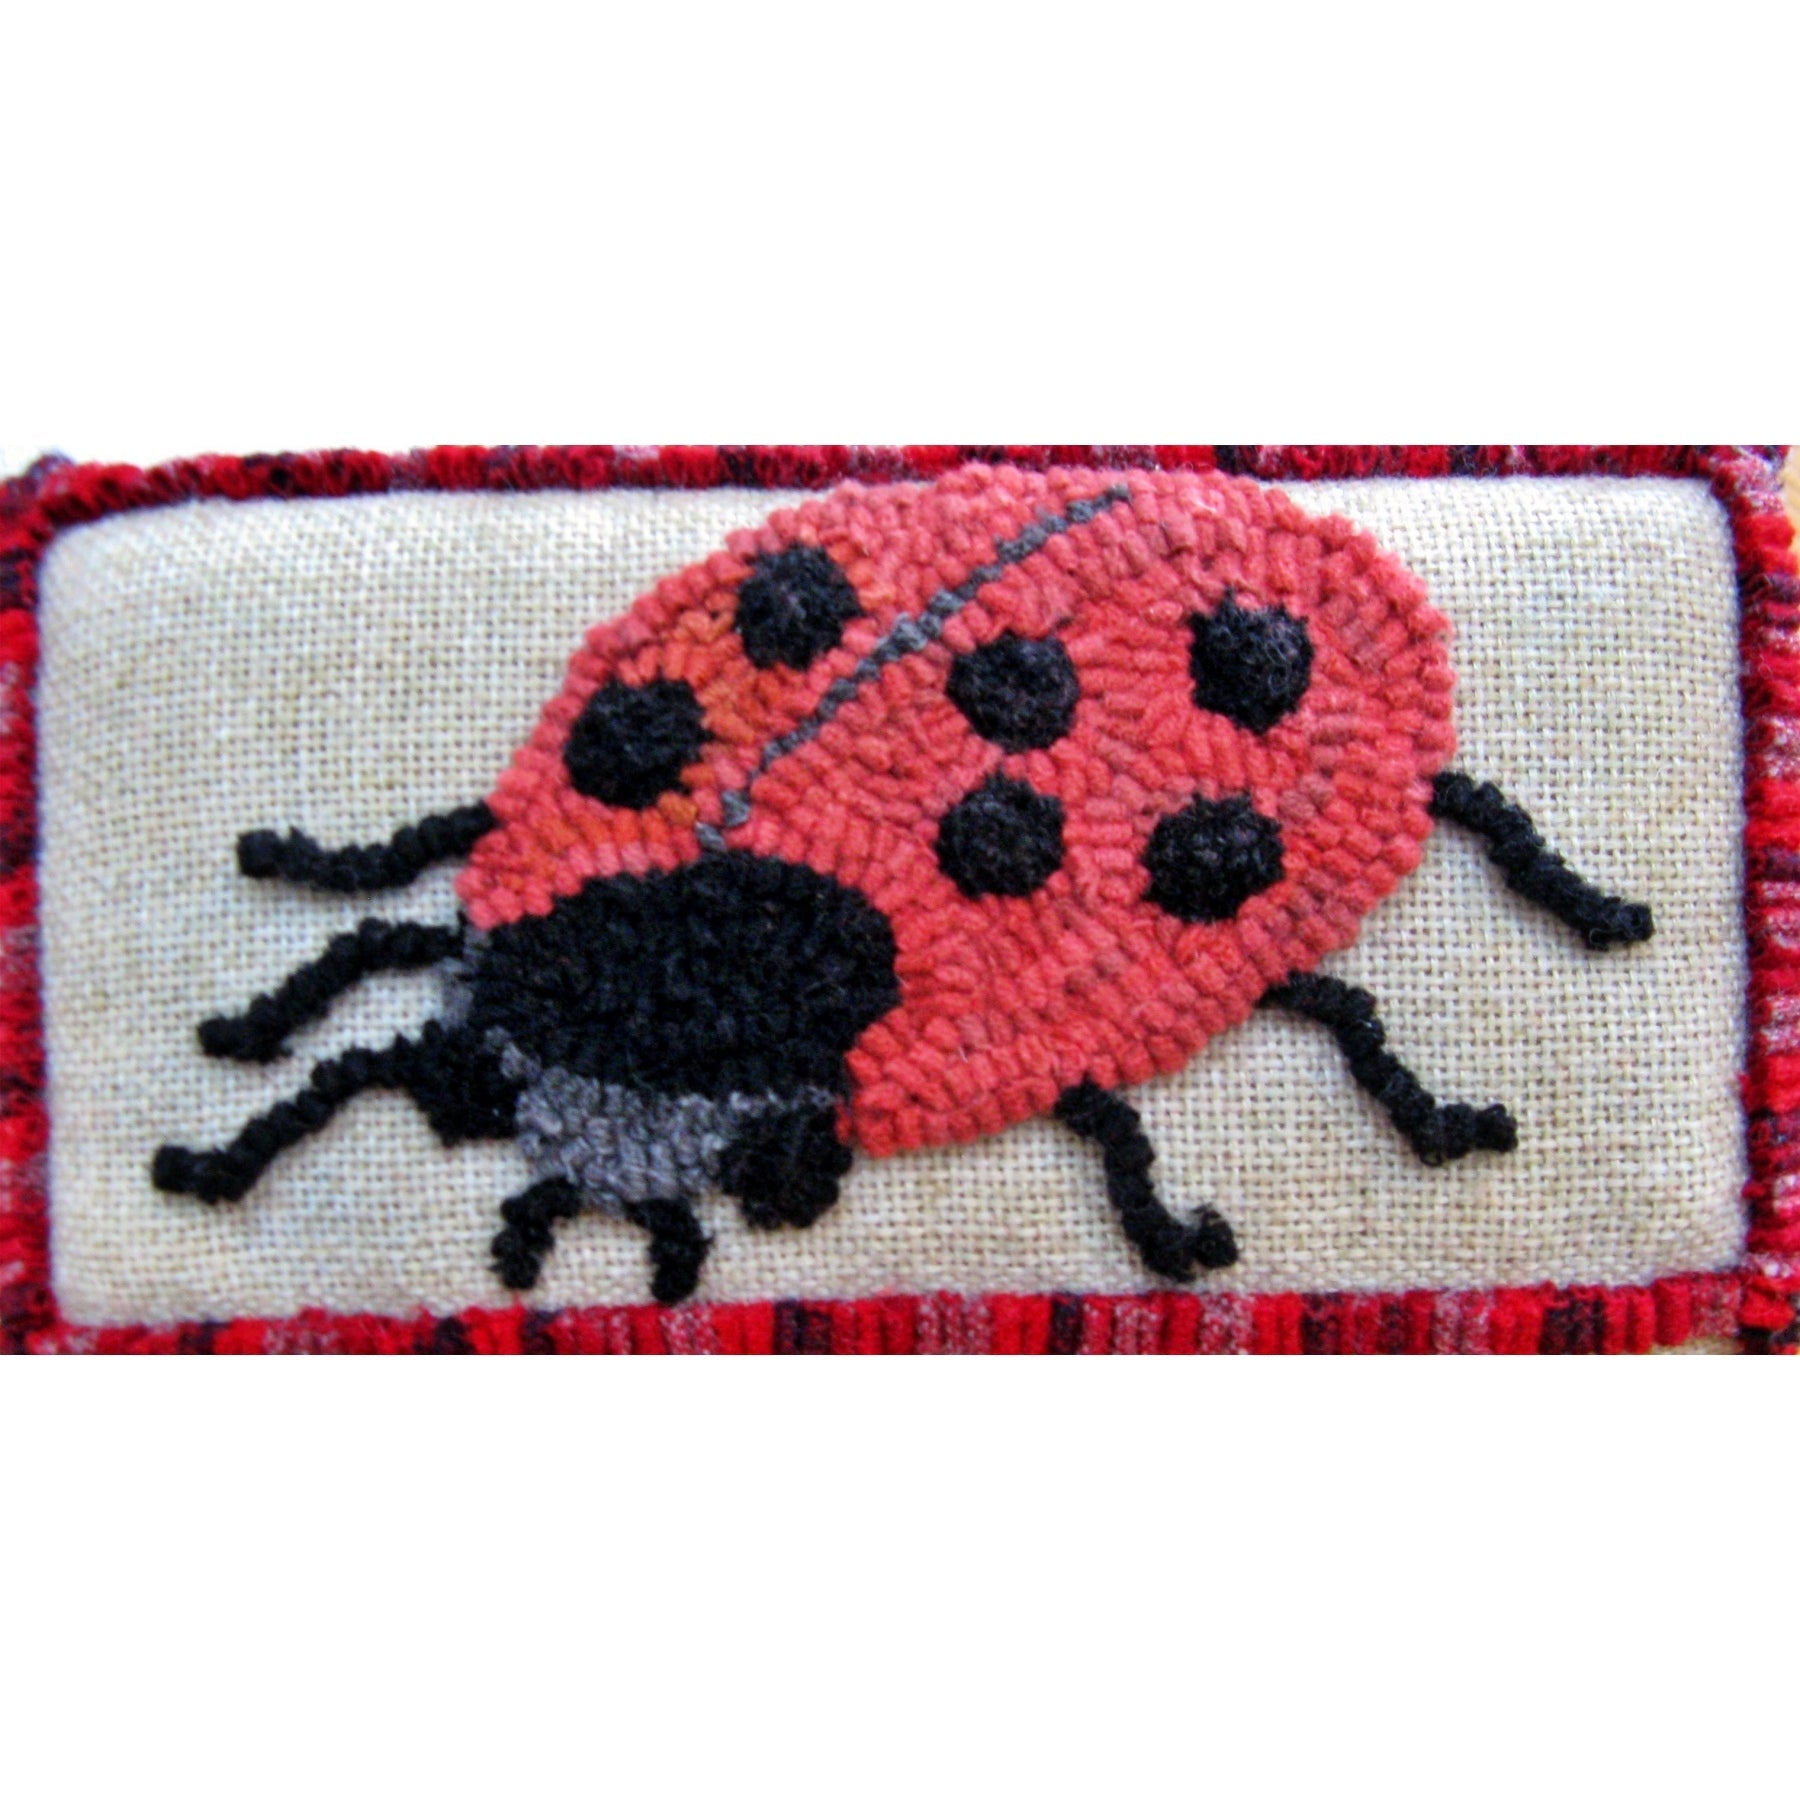 Ladybug, rug hooked by Karen Maddox